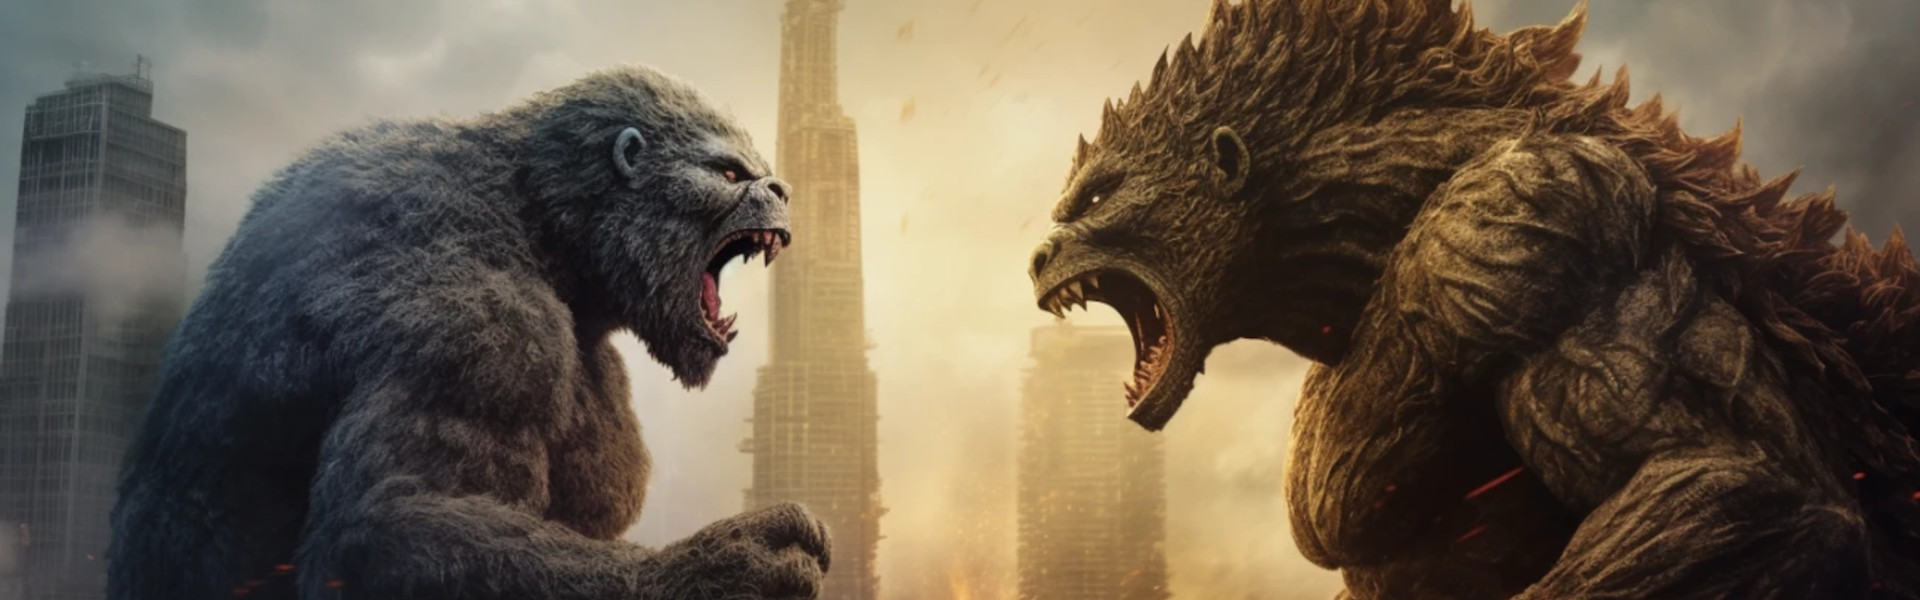 Godzilla i Kong: Nowe imperium <span> (napisy) </span>